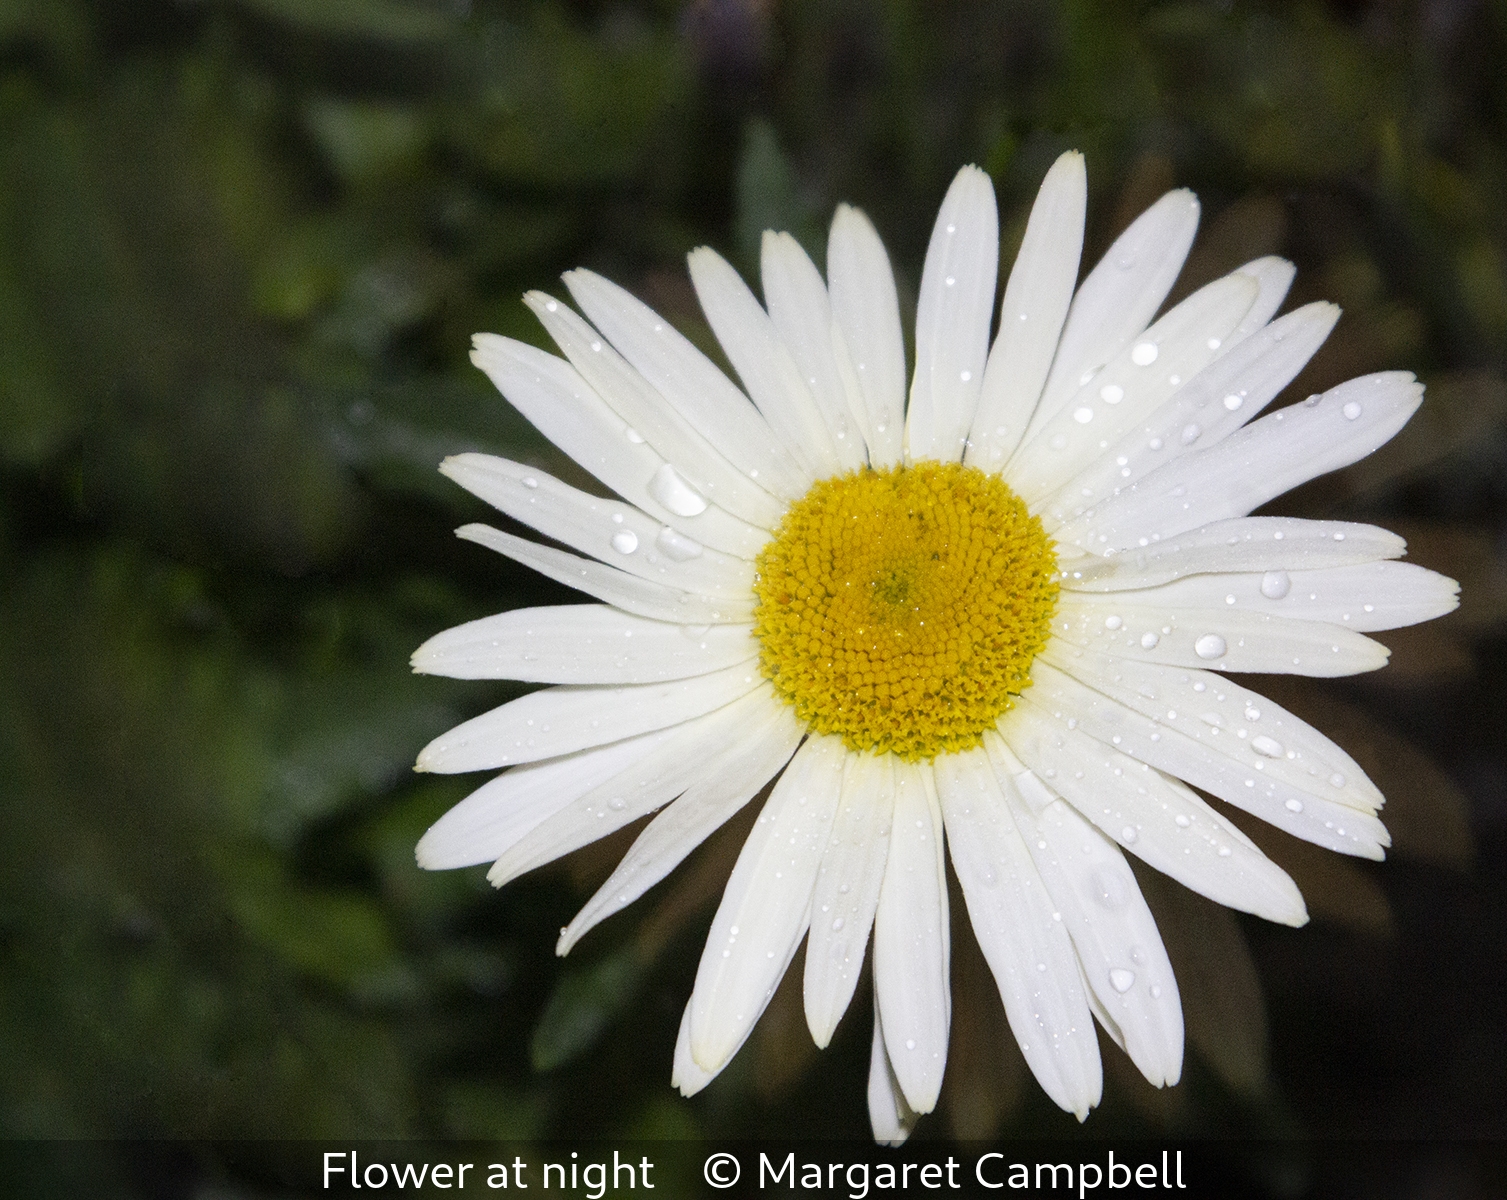 Margaret Campbell_Flower at night